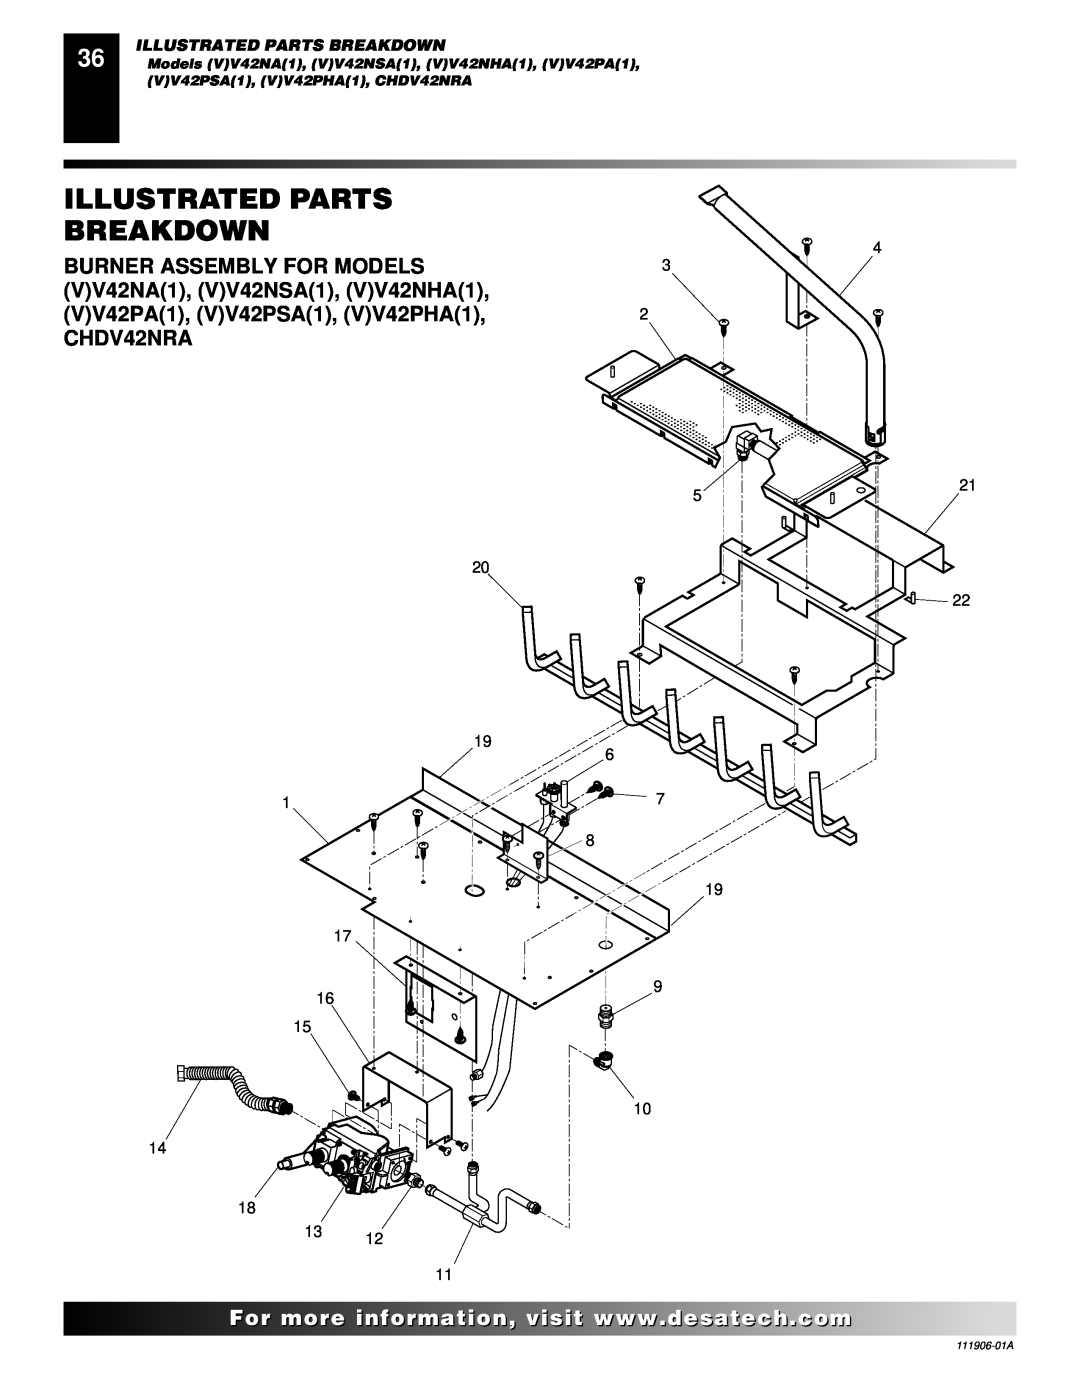 Desa (V)V42NA(1) installation manual Illustrated Parts Breakdown, 111906-01A 